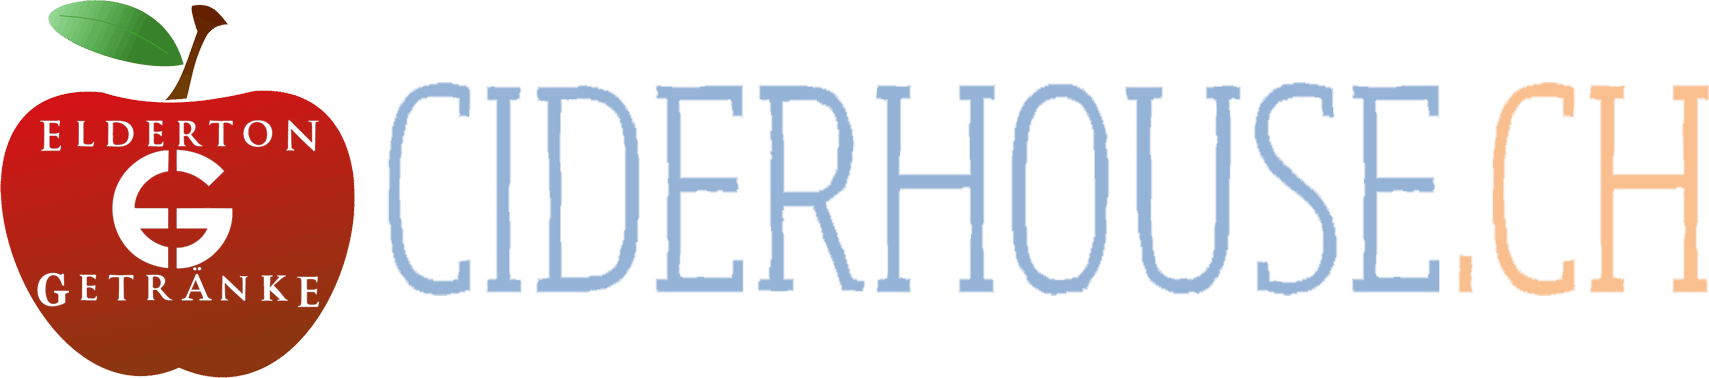 Ciderhouse.ch Logo - from Elderton Getränke